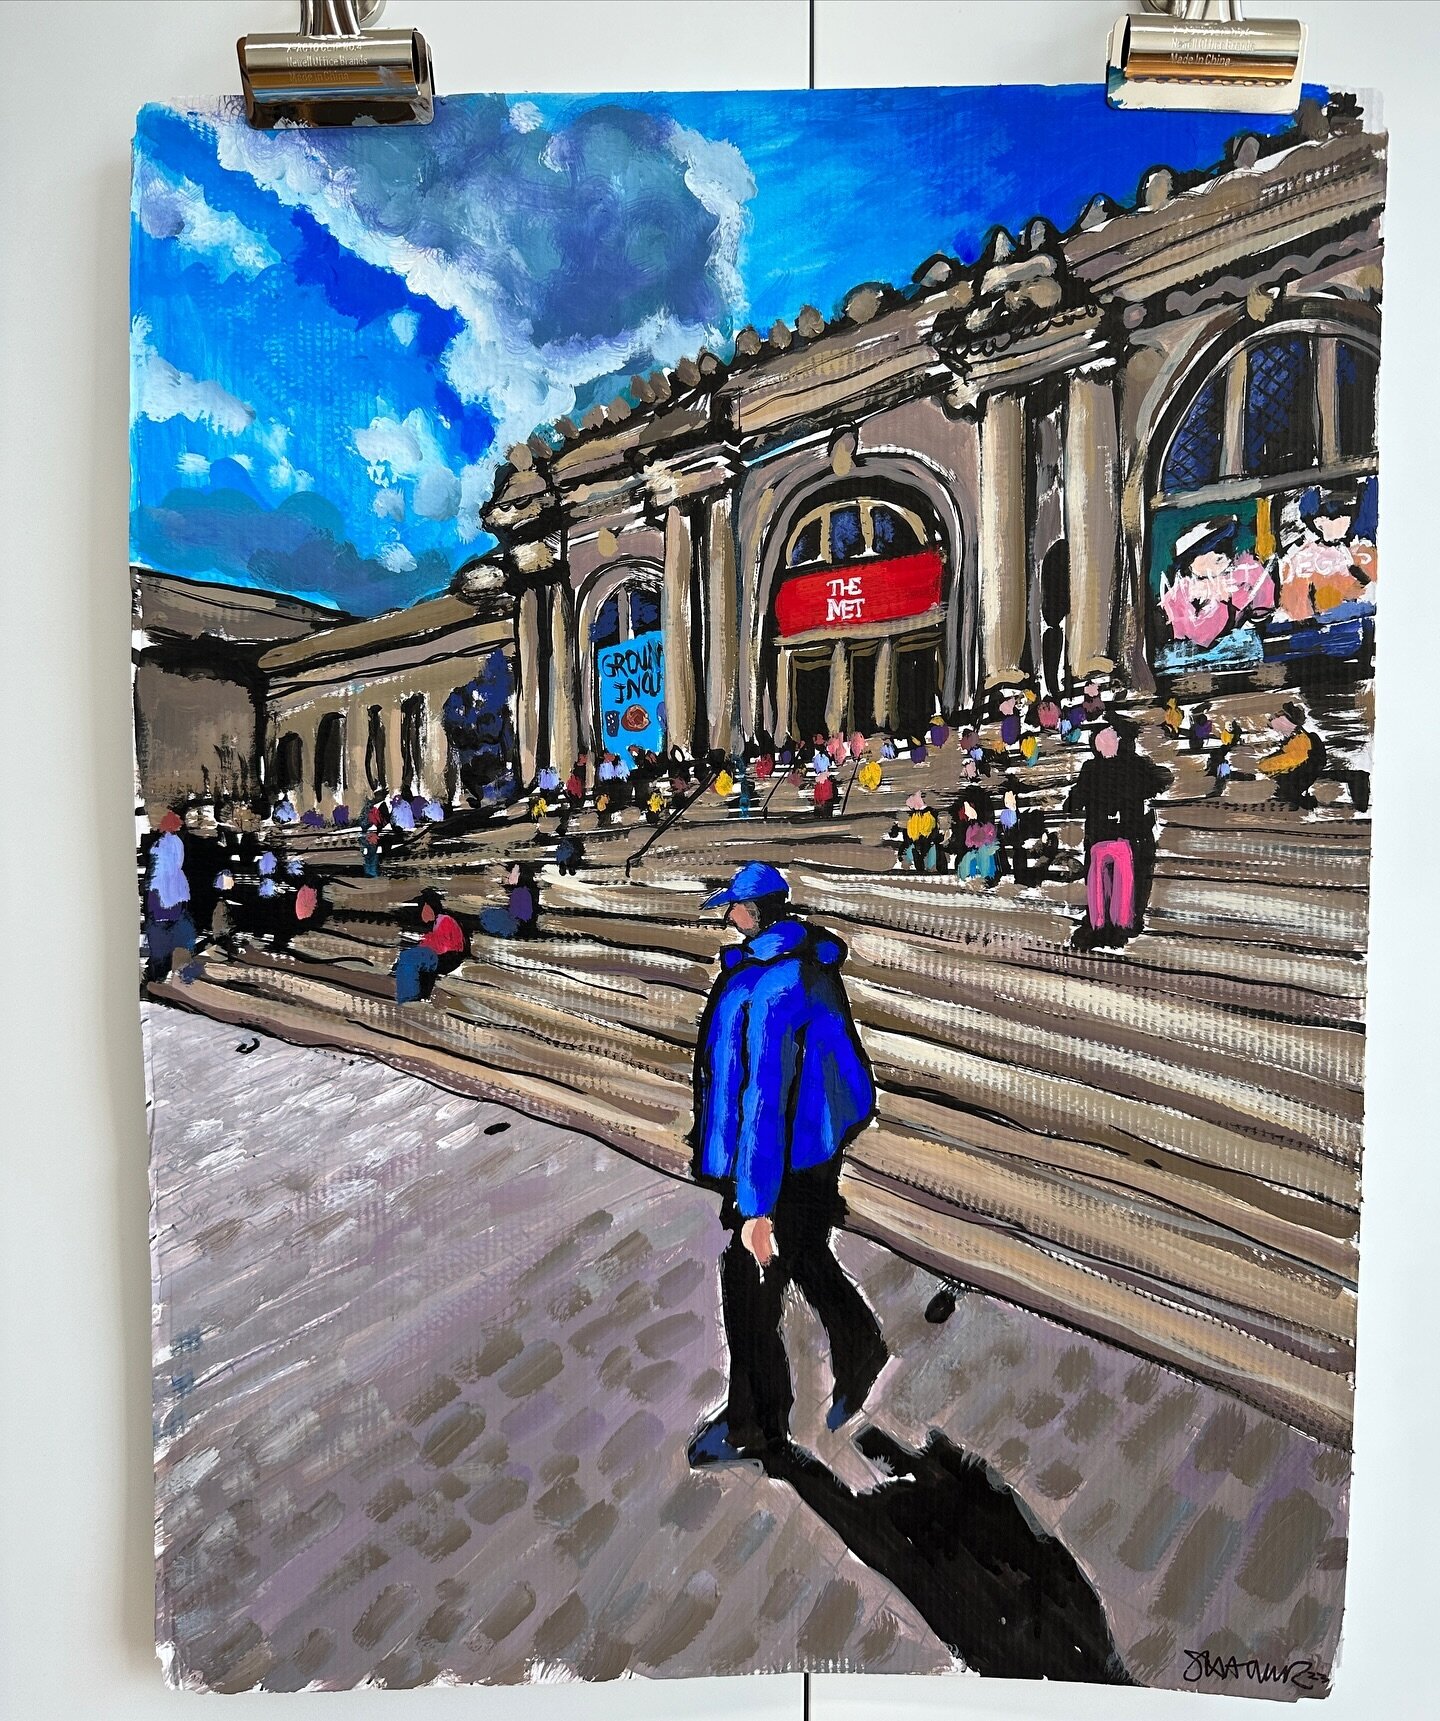 Blue skies at The Met. @metmuseum 
Acrylic and ink on cardboard. 18x24in-ish.